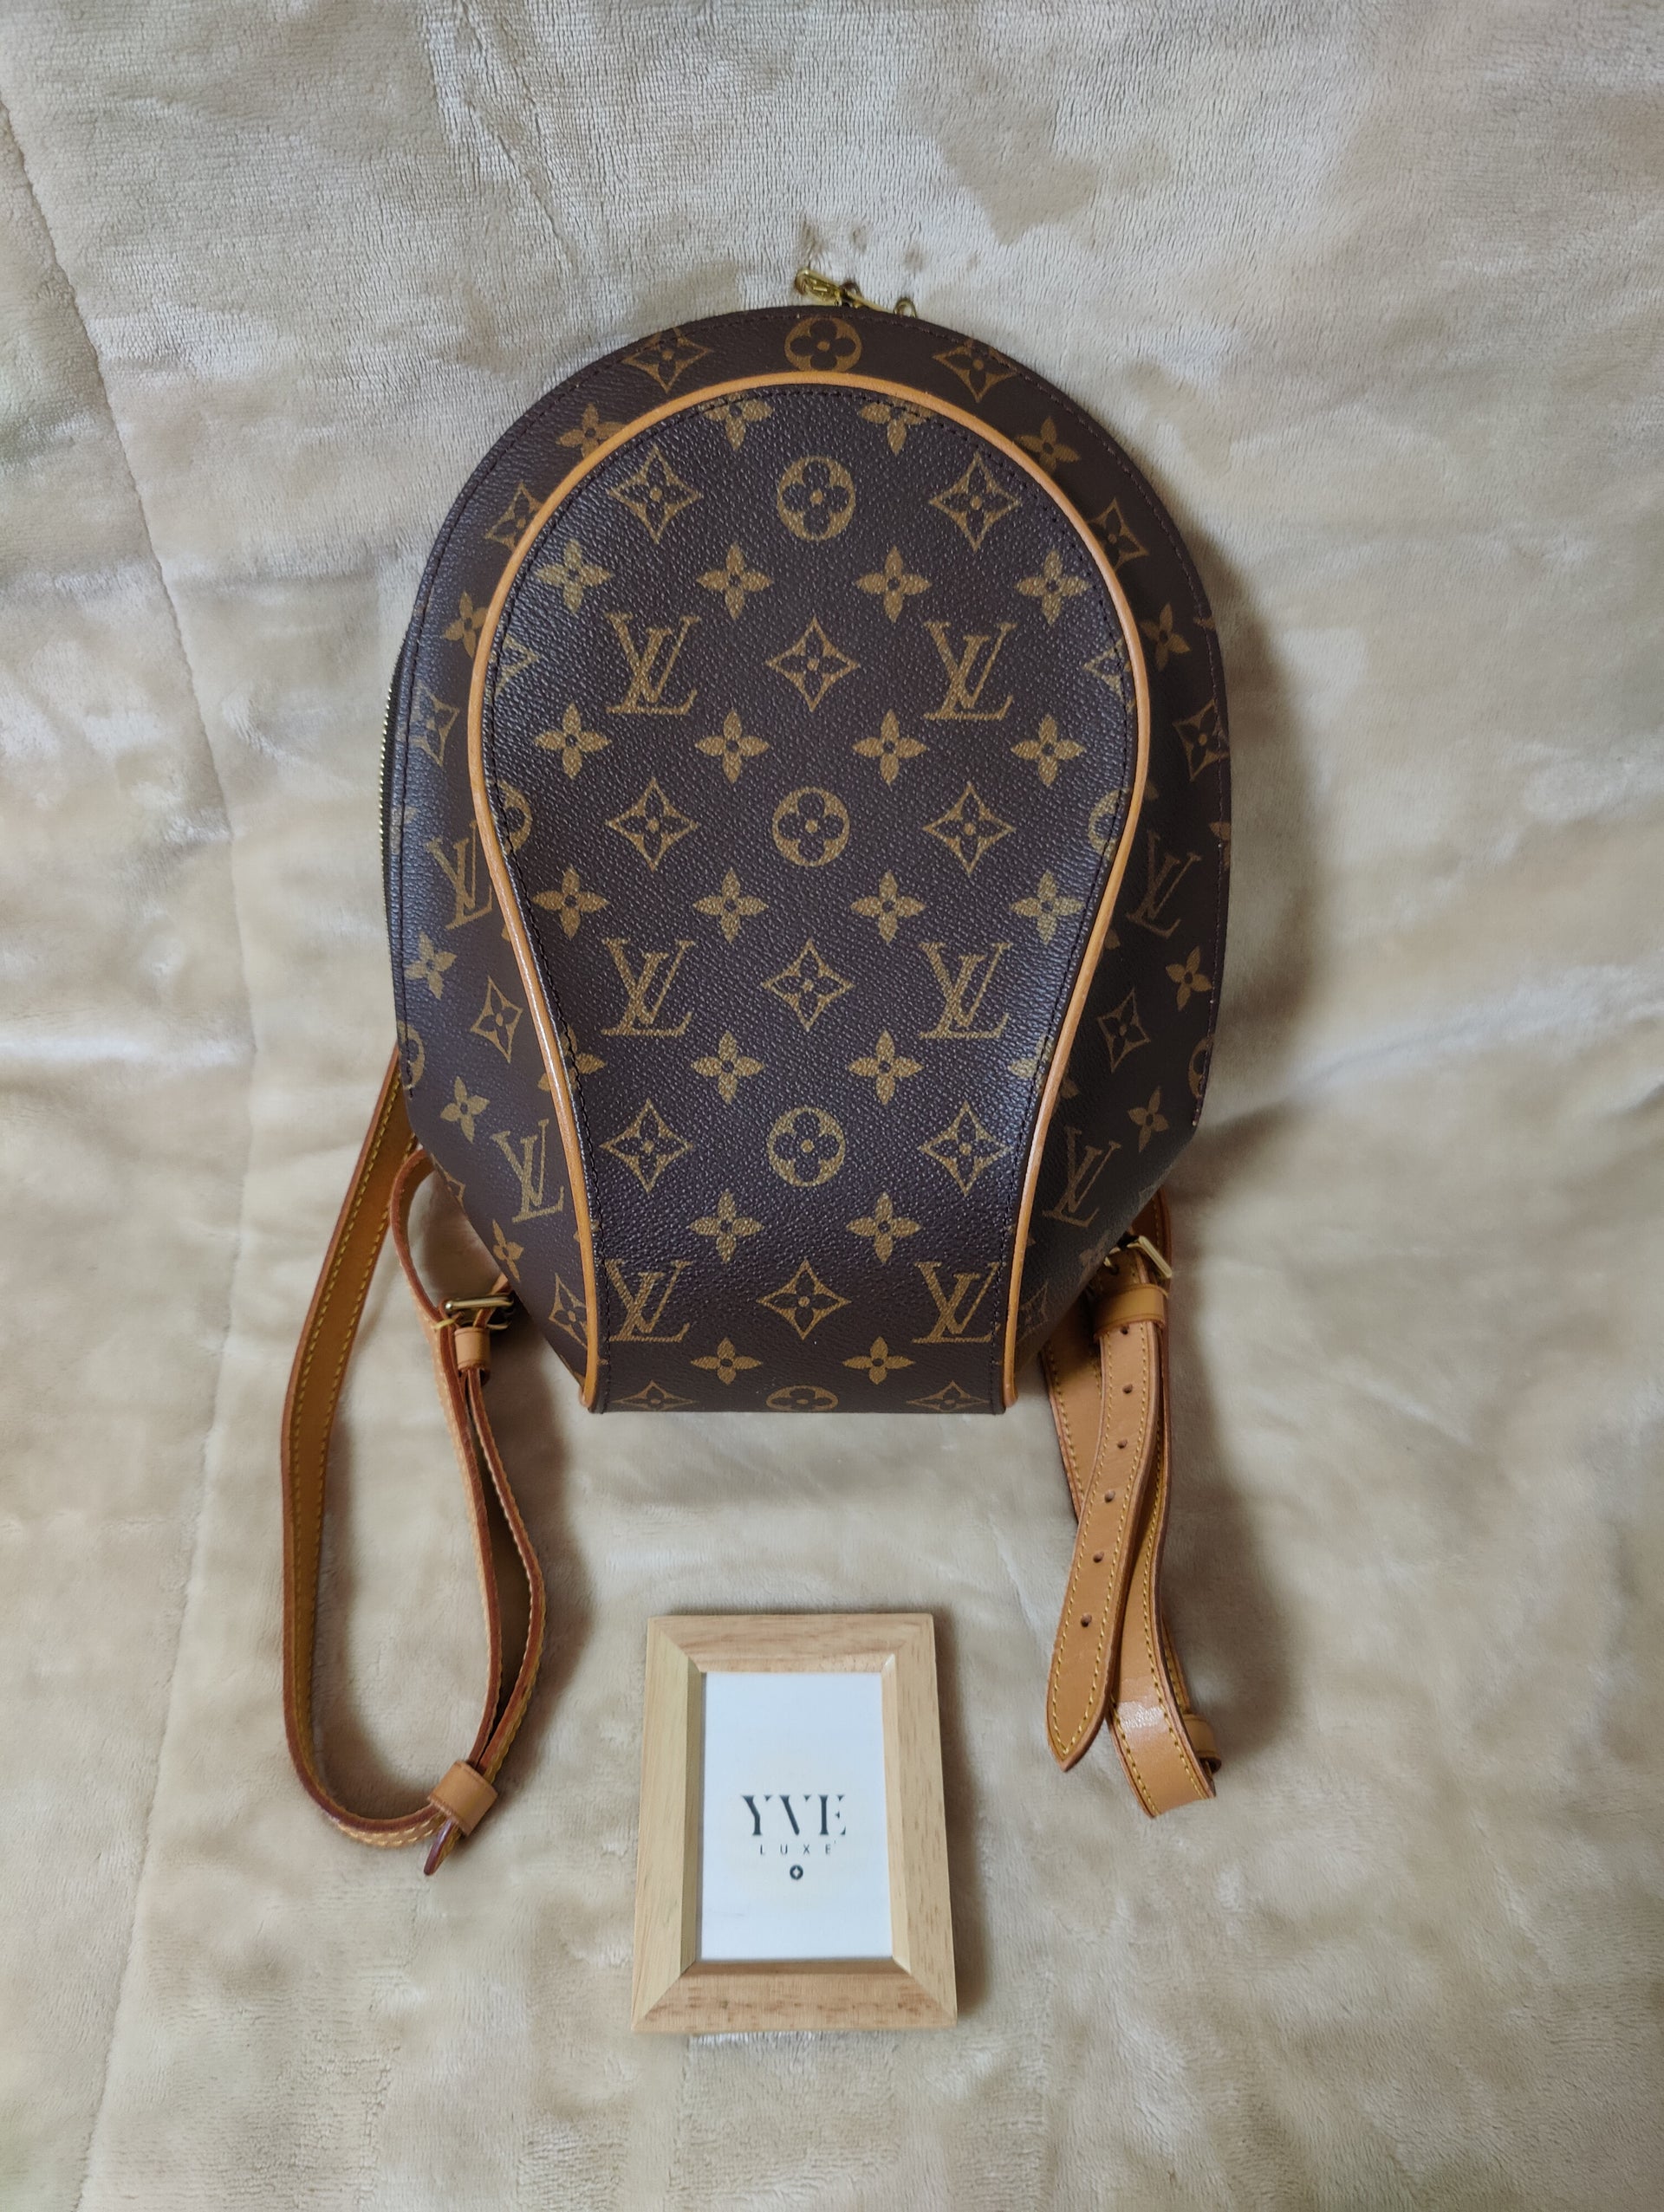 SOLD- Louis Vuitton ellipse backpack.